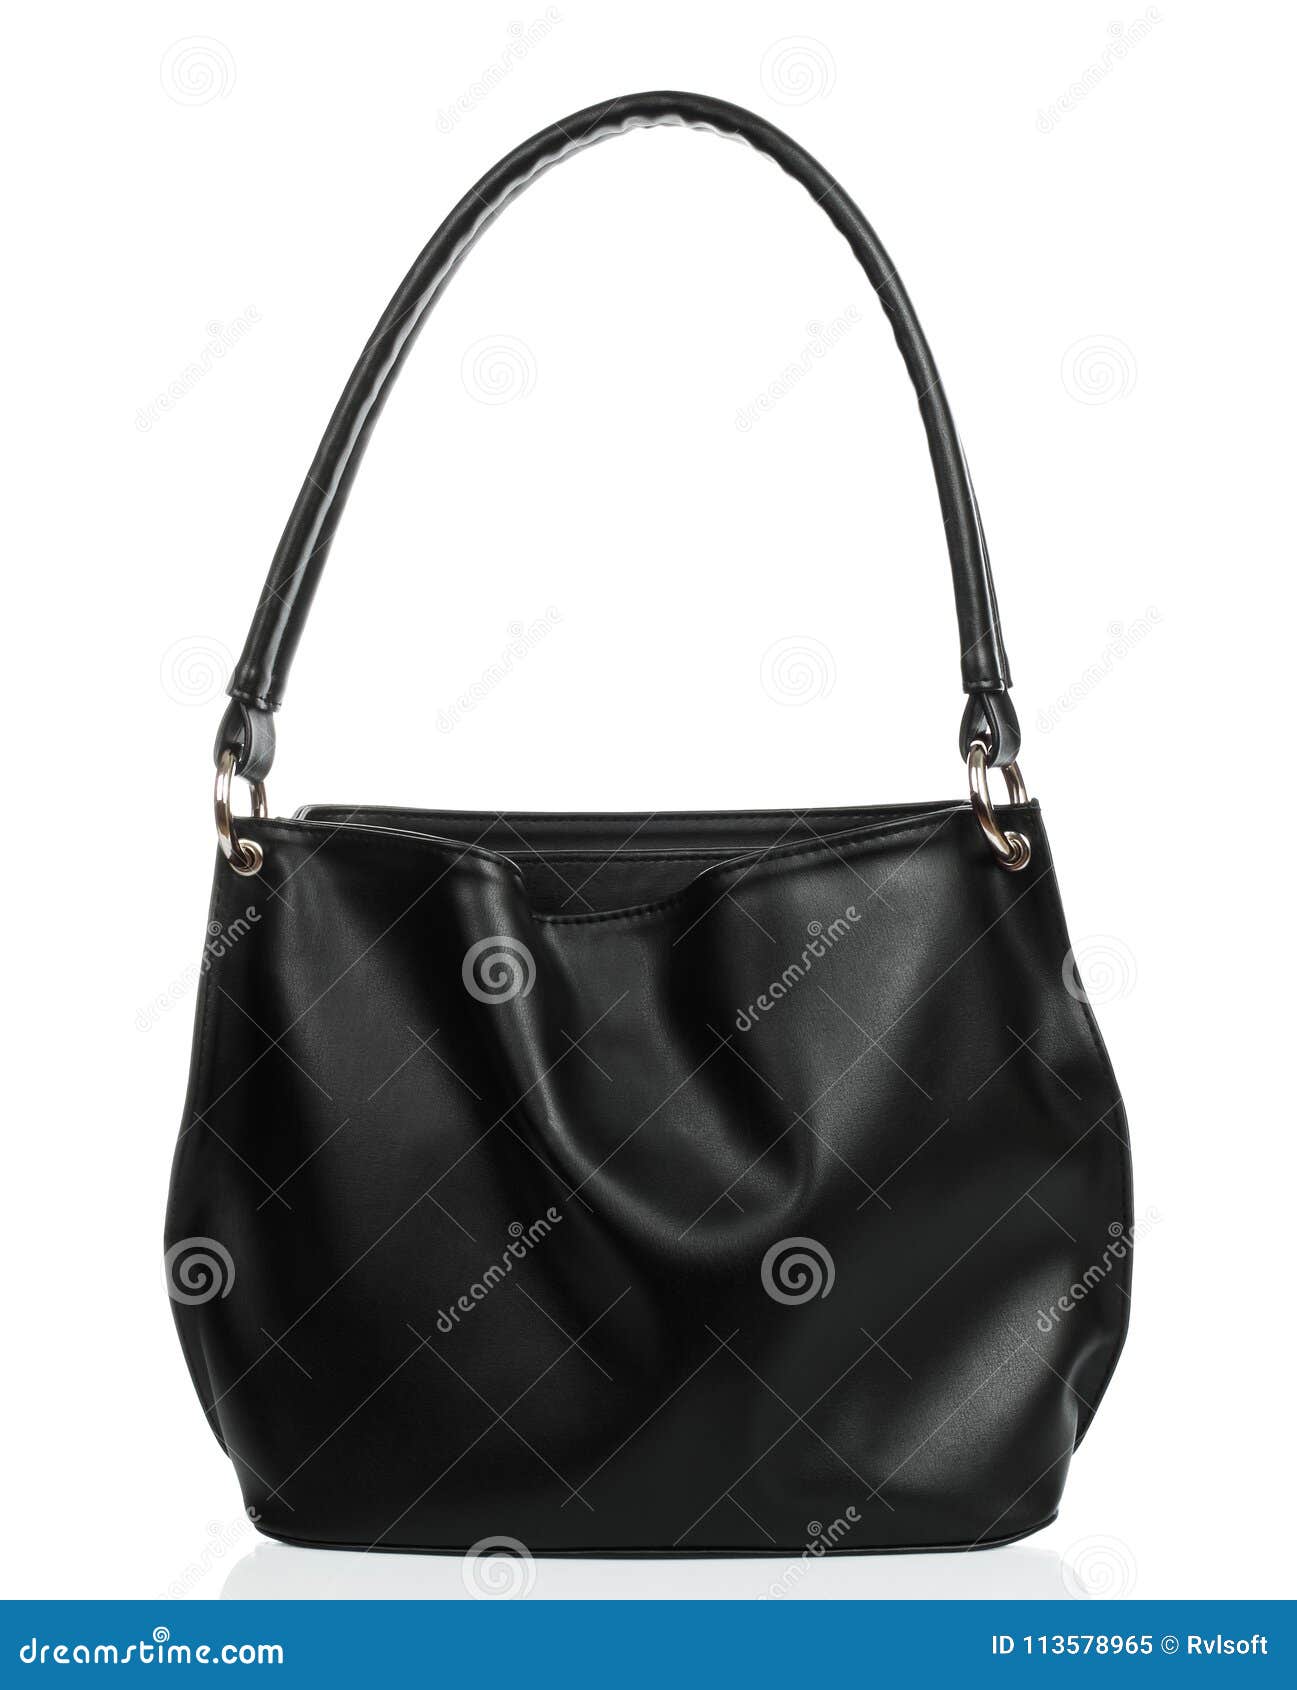 Black women leather bag stock image. Image of classic - 113578965